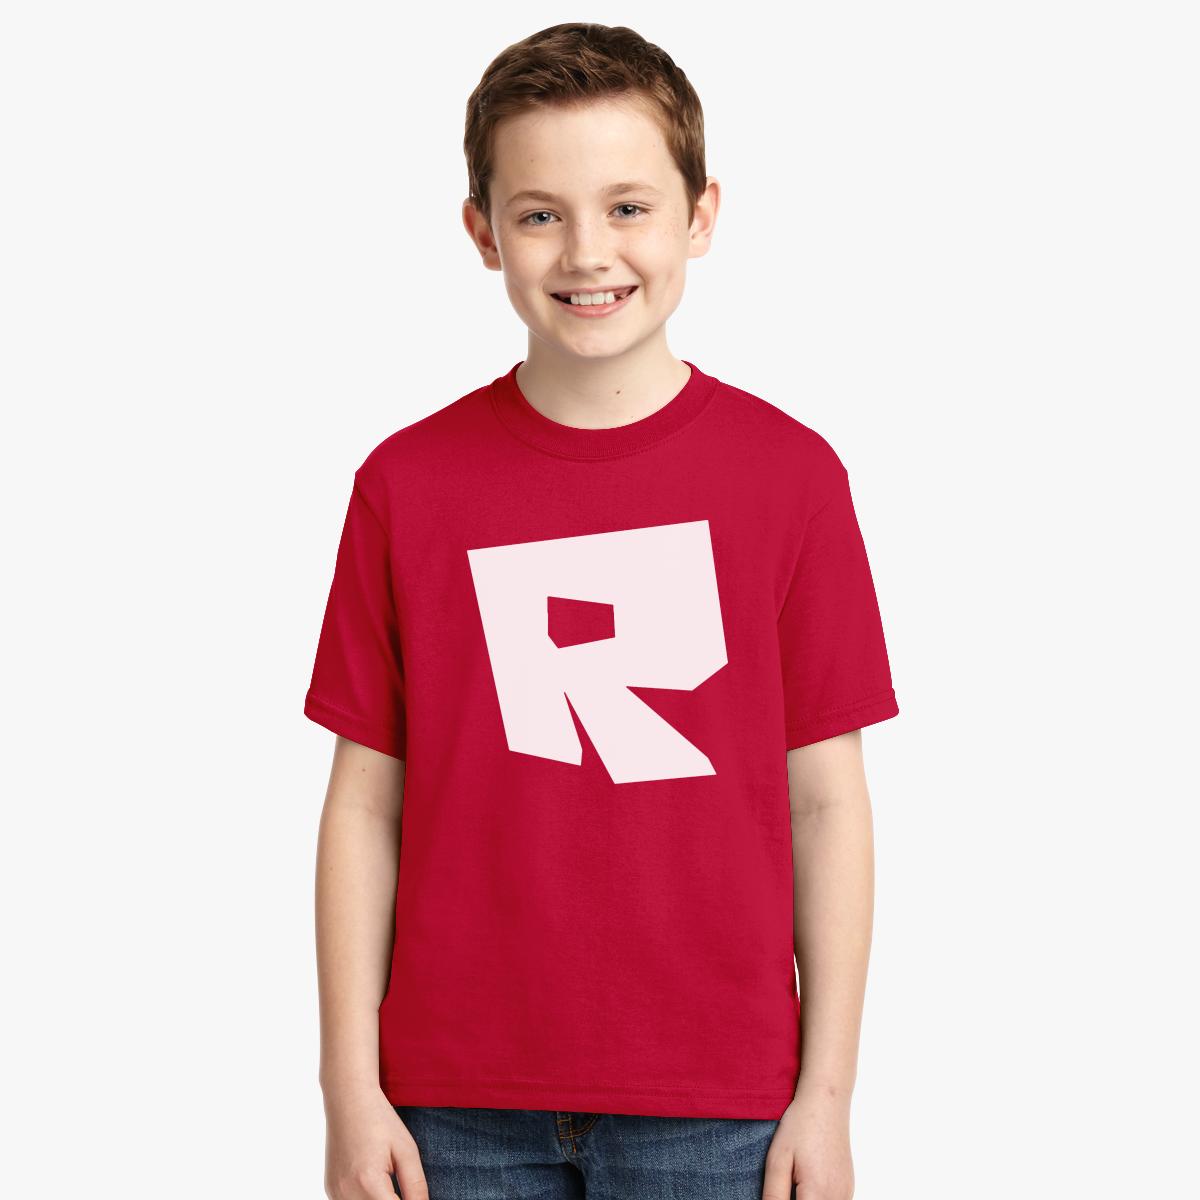 Roblox Abs T Shirt Code Rldm - roblox logos roblox t shirt teepublic roblox